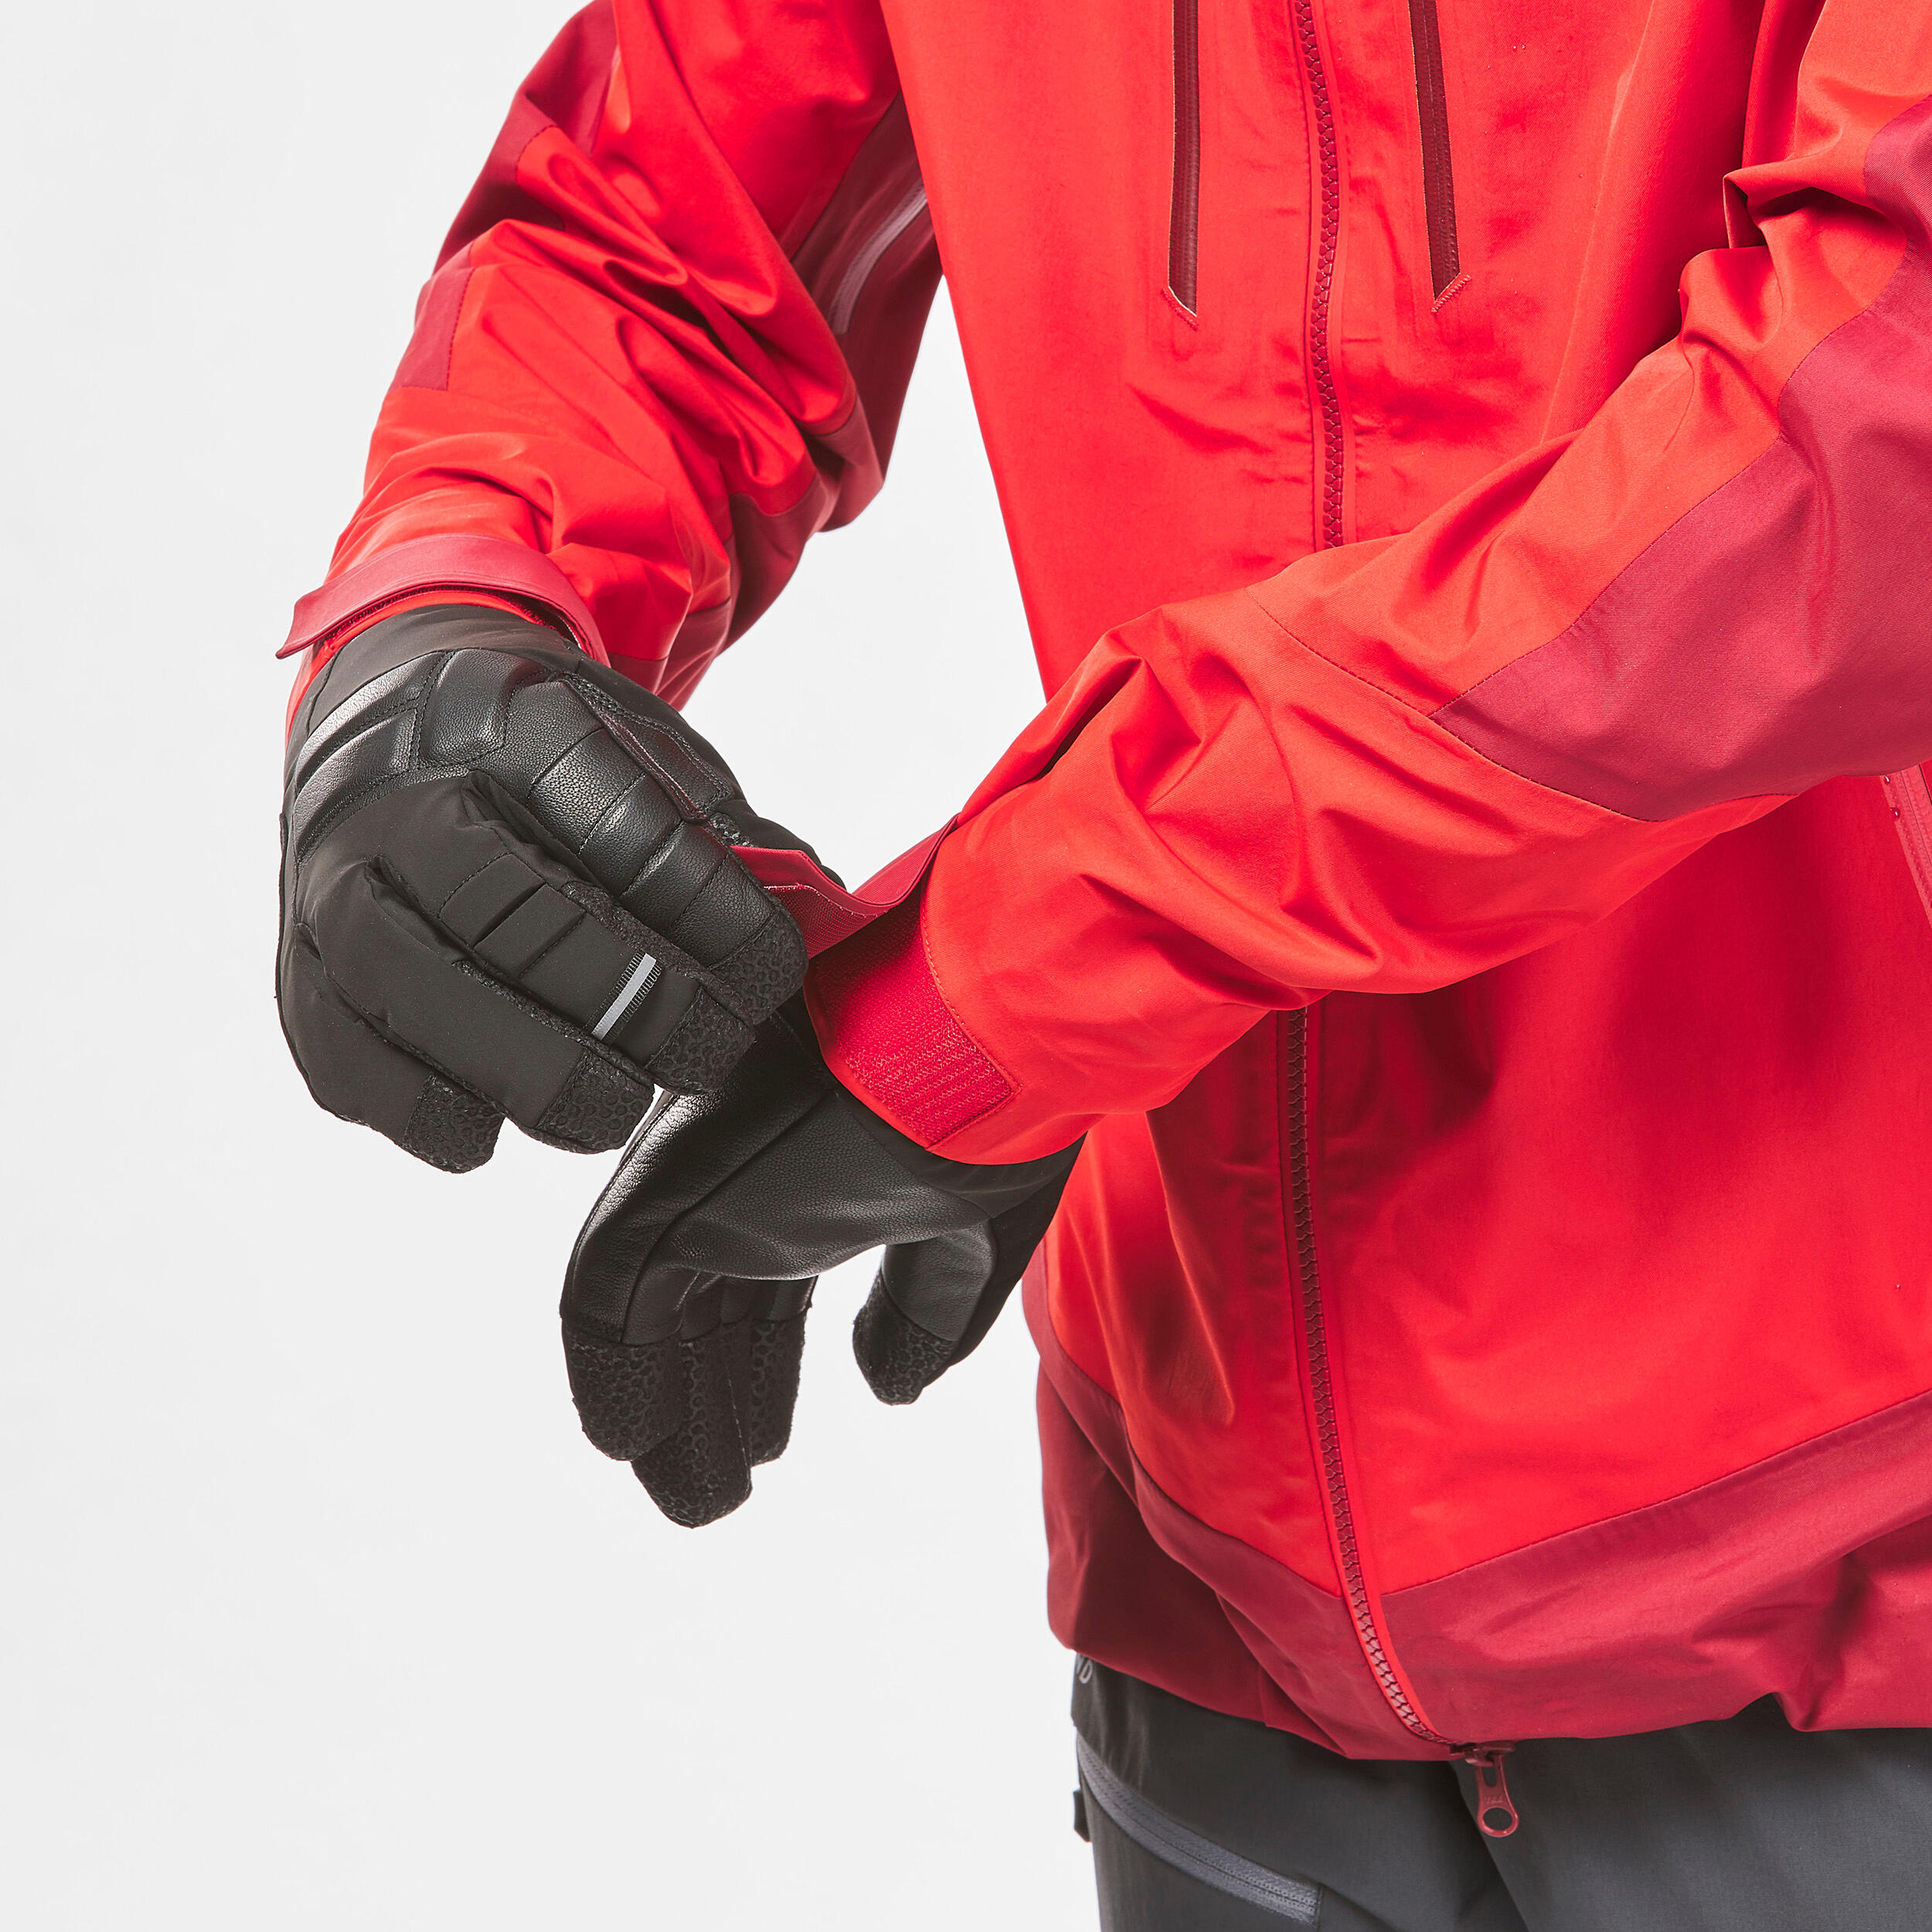 Men’s waterproof durable mountaineering jacket, red 14/17